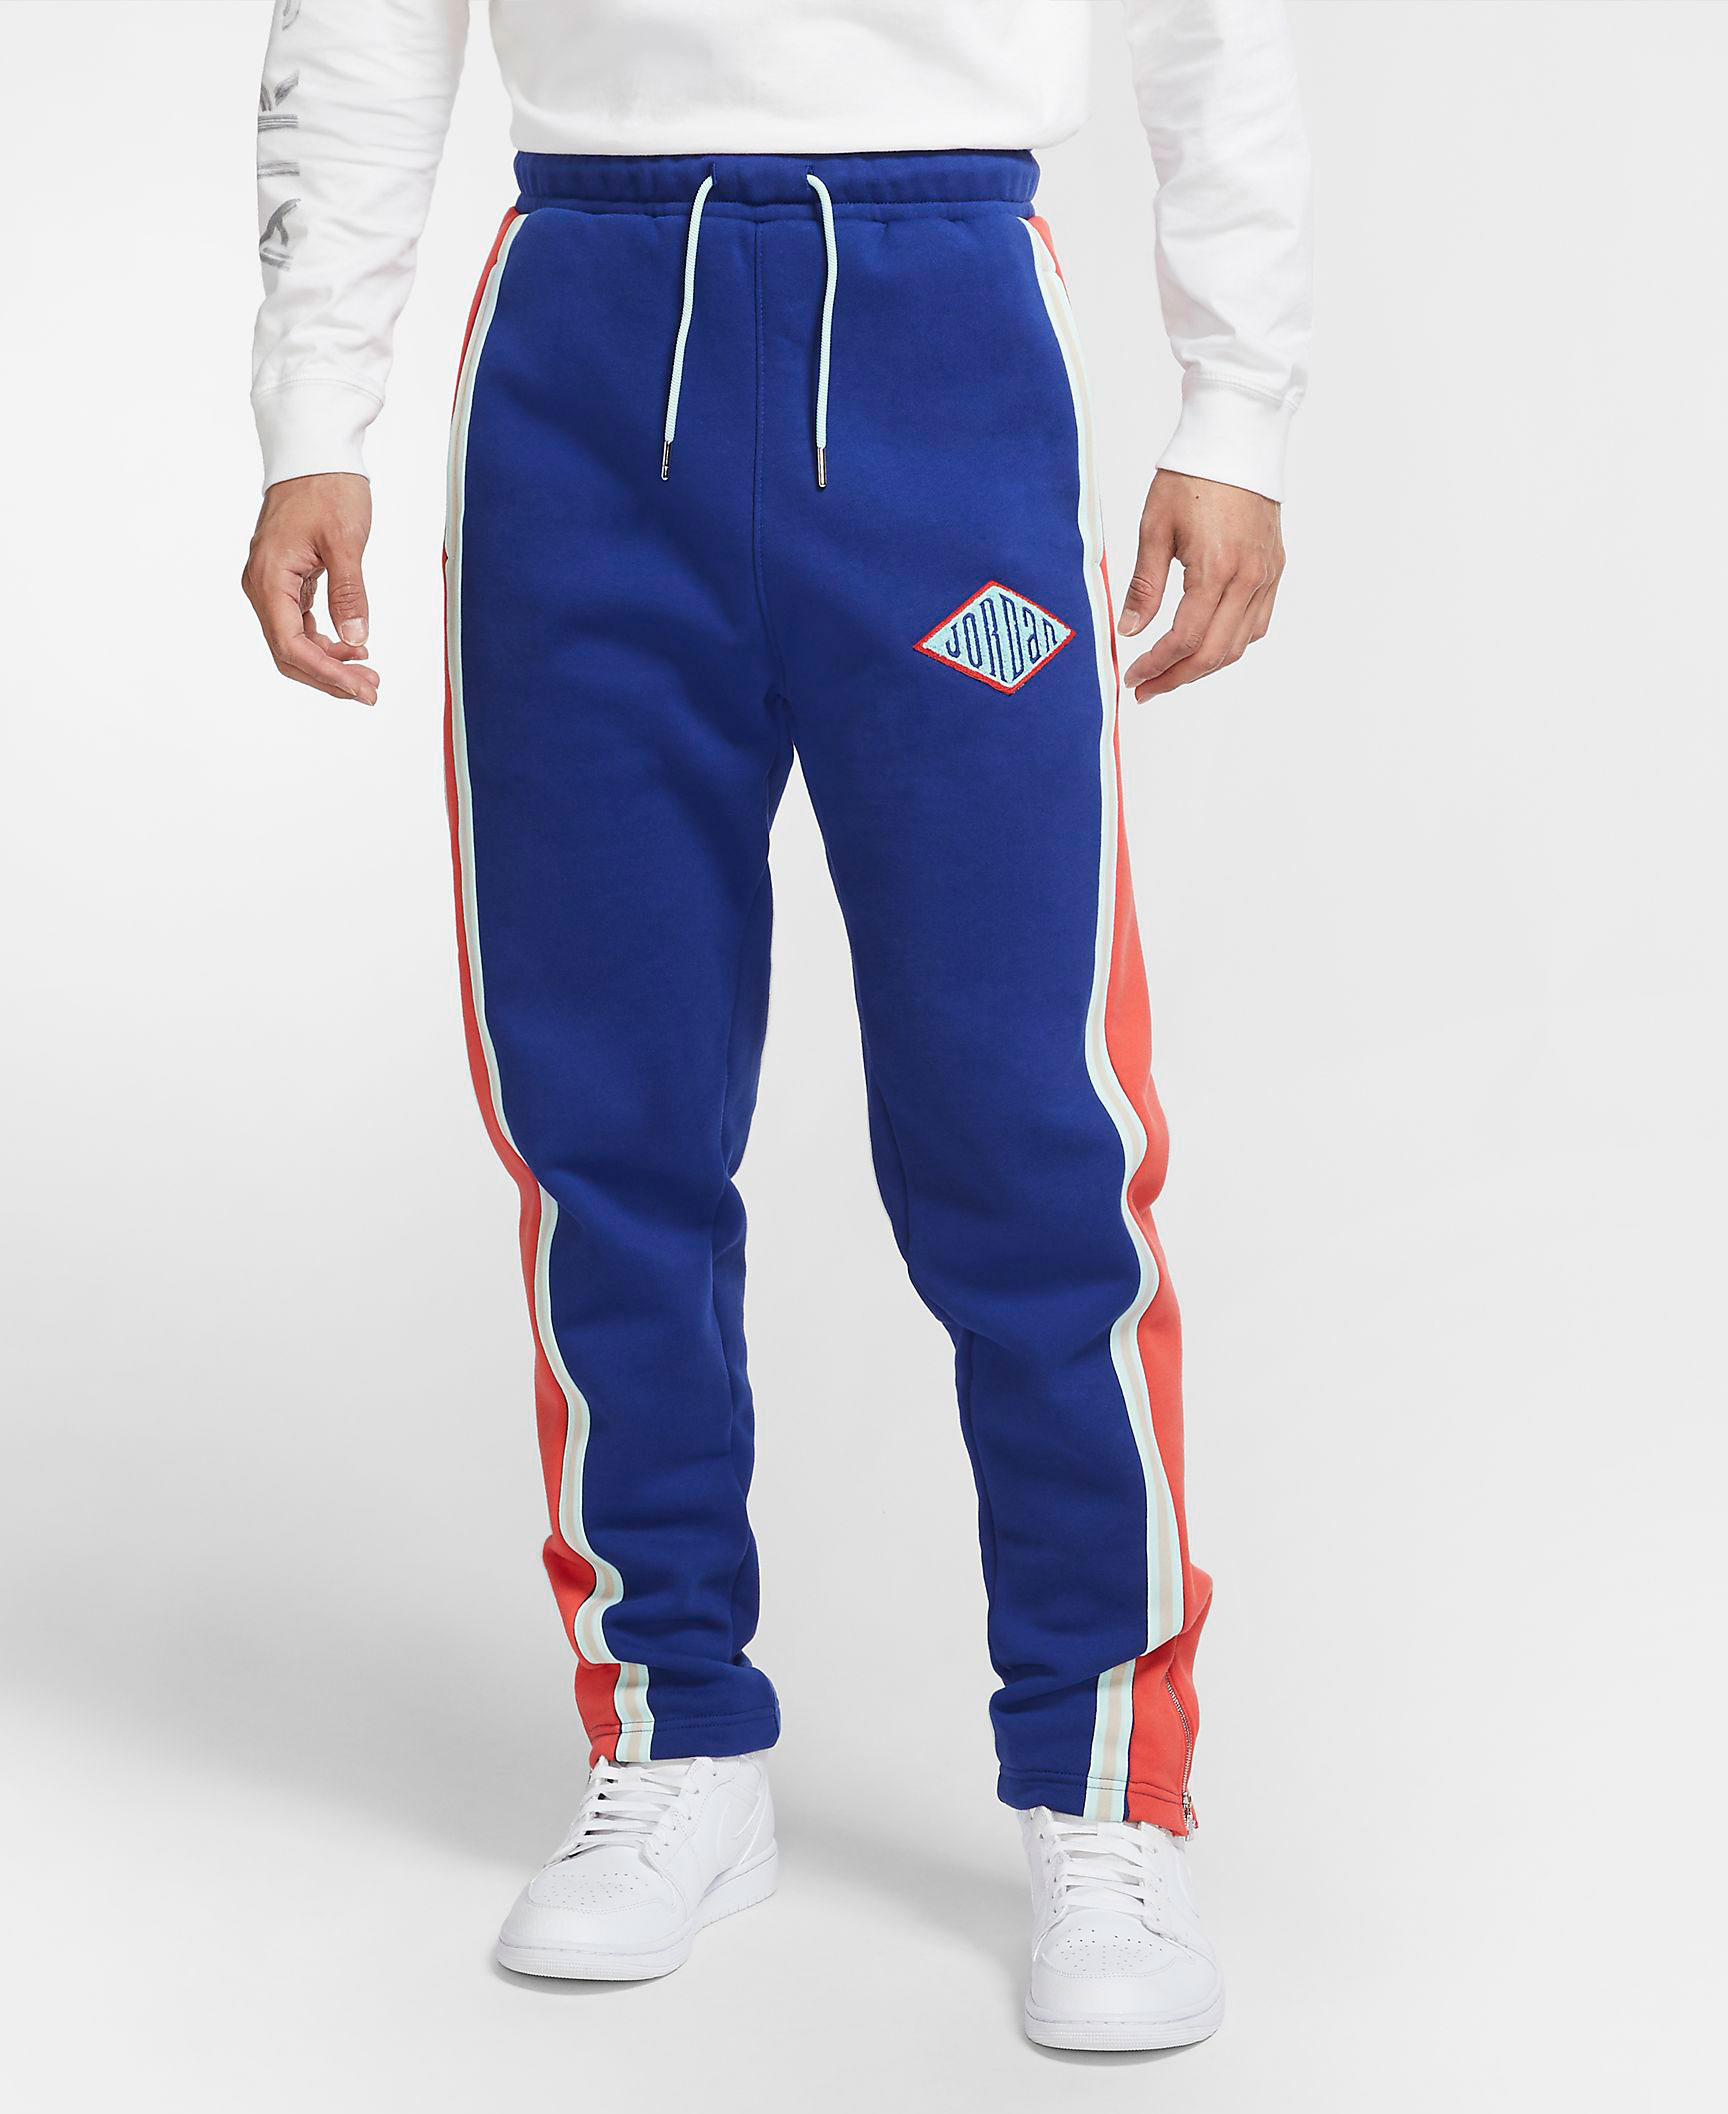 jordan-sport-dna-pants-blue-infrared